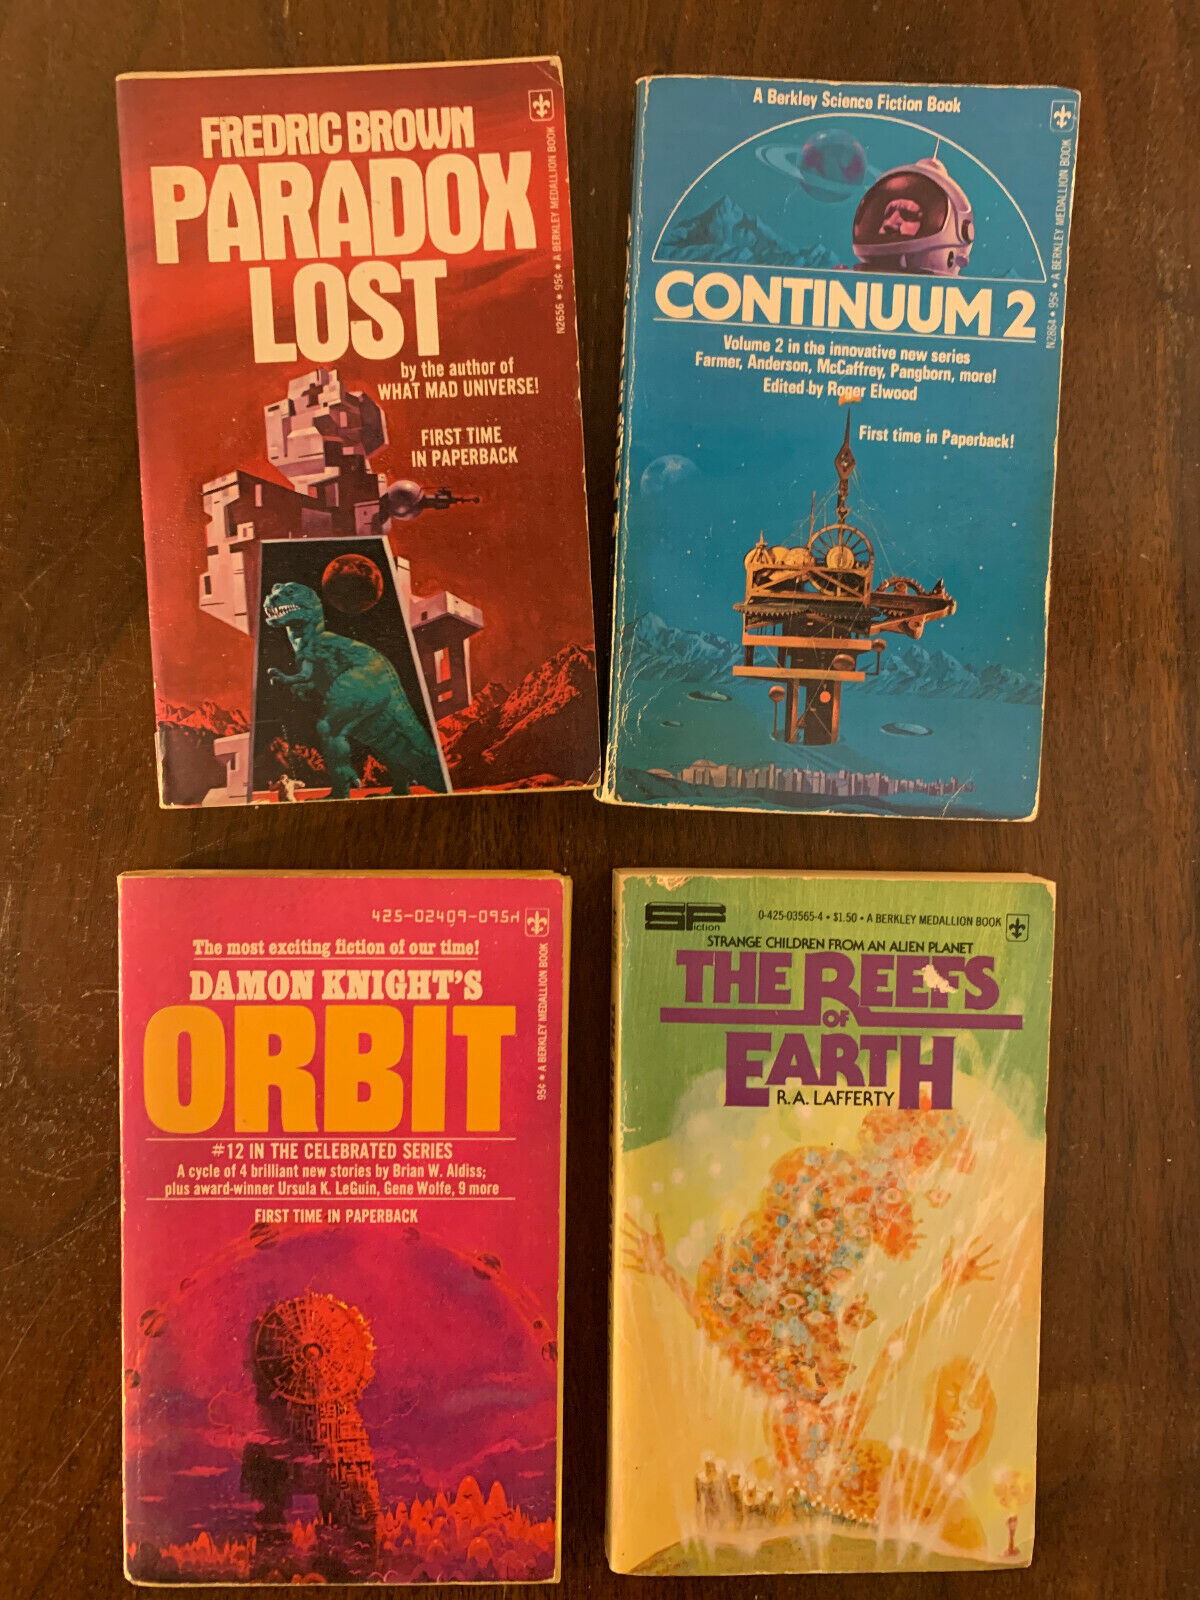 Berkely Sci Fi 23 Book Lot, Simak, Deathworld Trilogy, Harrison, Algorithm